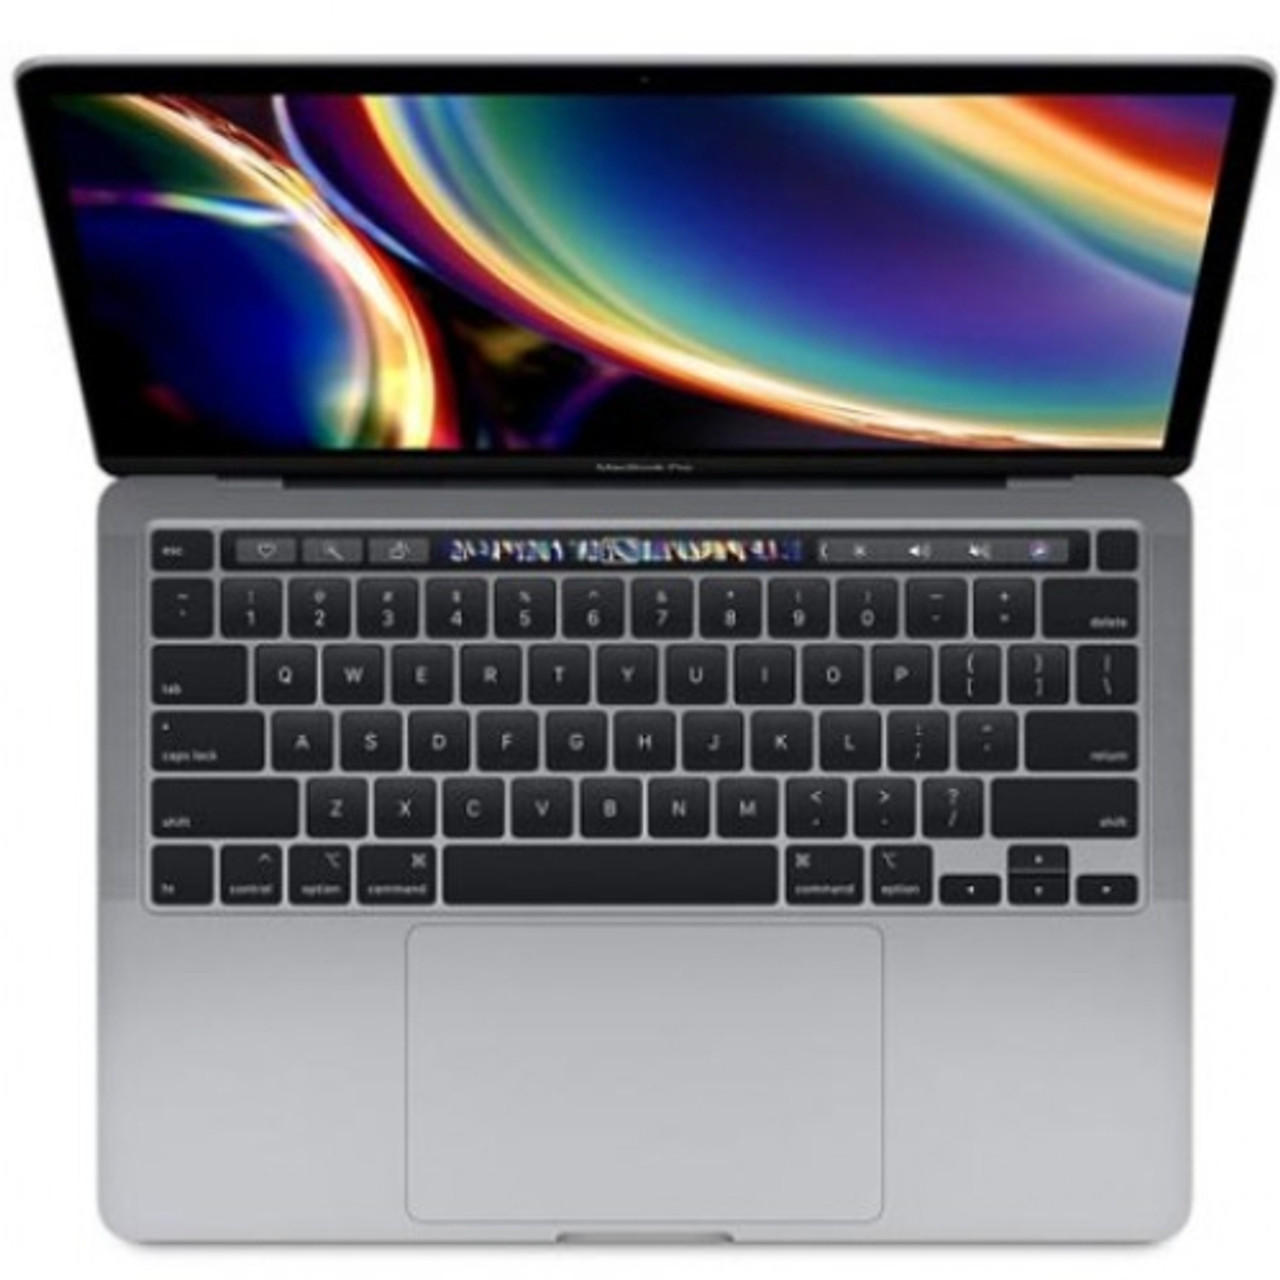 Apple MacBook Pro 13-inch 2.0GHz Core i5 (Retina